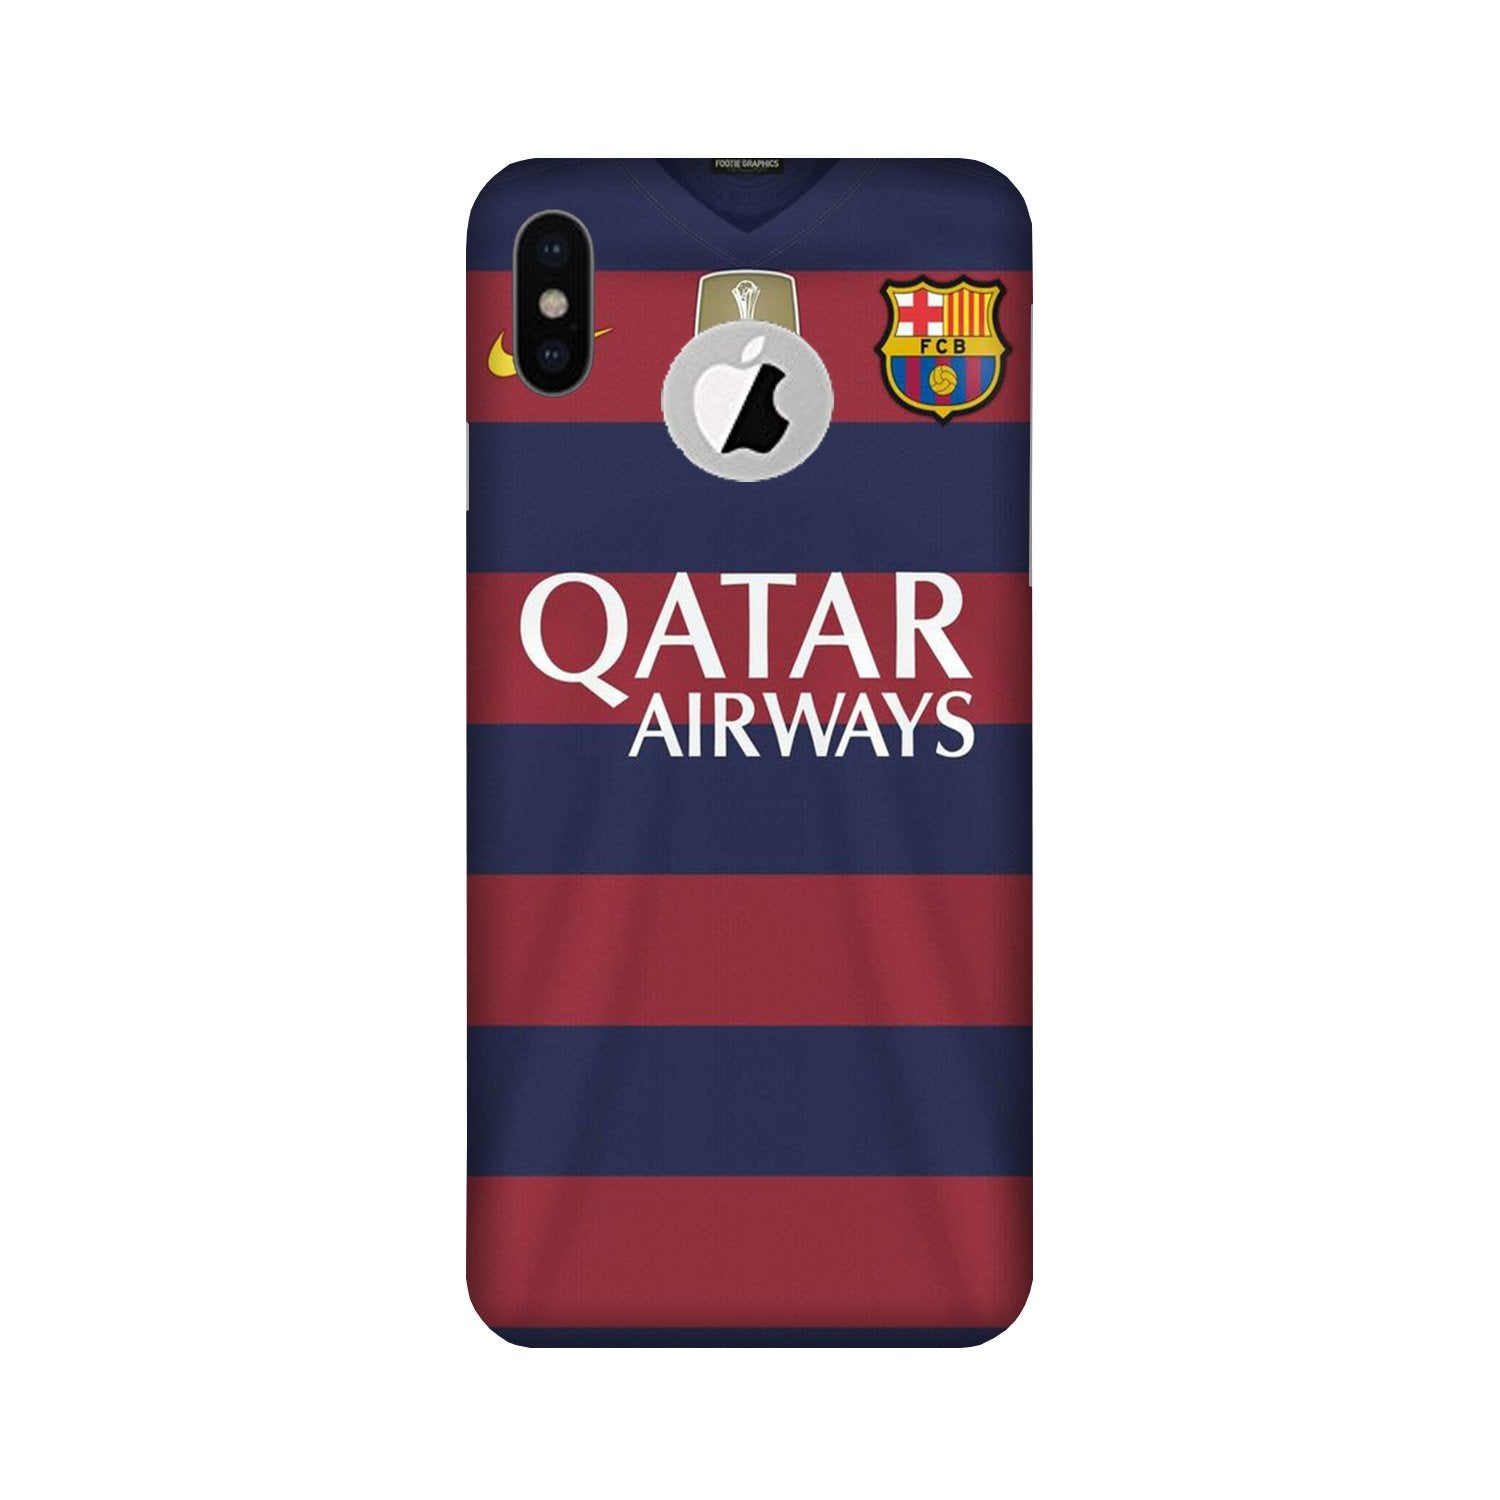 Qatar Airways Case for iPhone X logo cut(Design - 160)